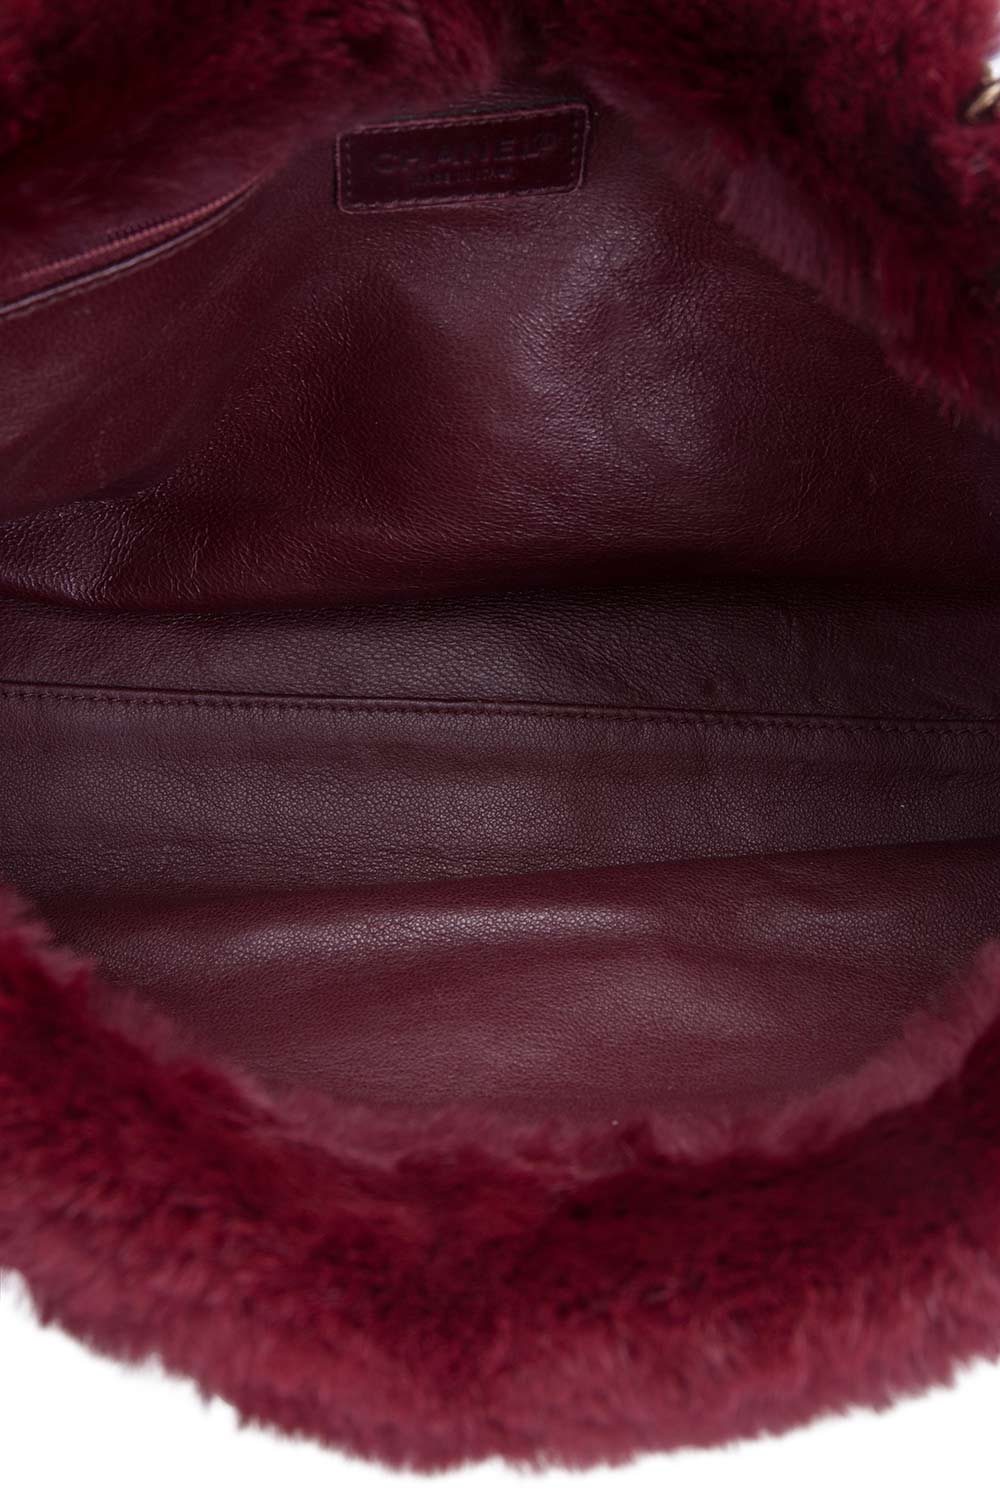 Pre-owned Chanel Maroon Fur Chain Shoulder Bag In Burgundy